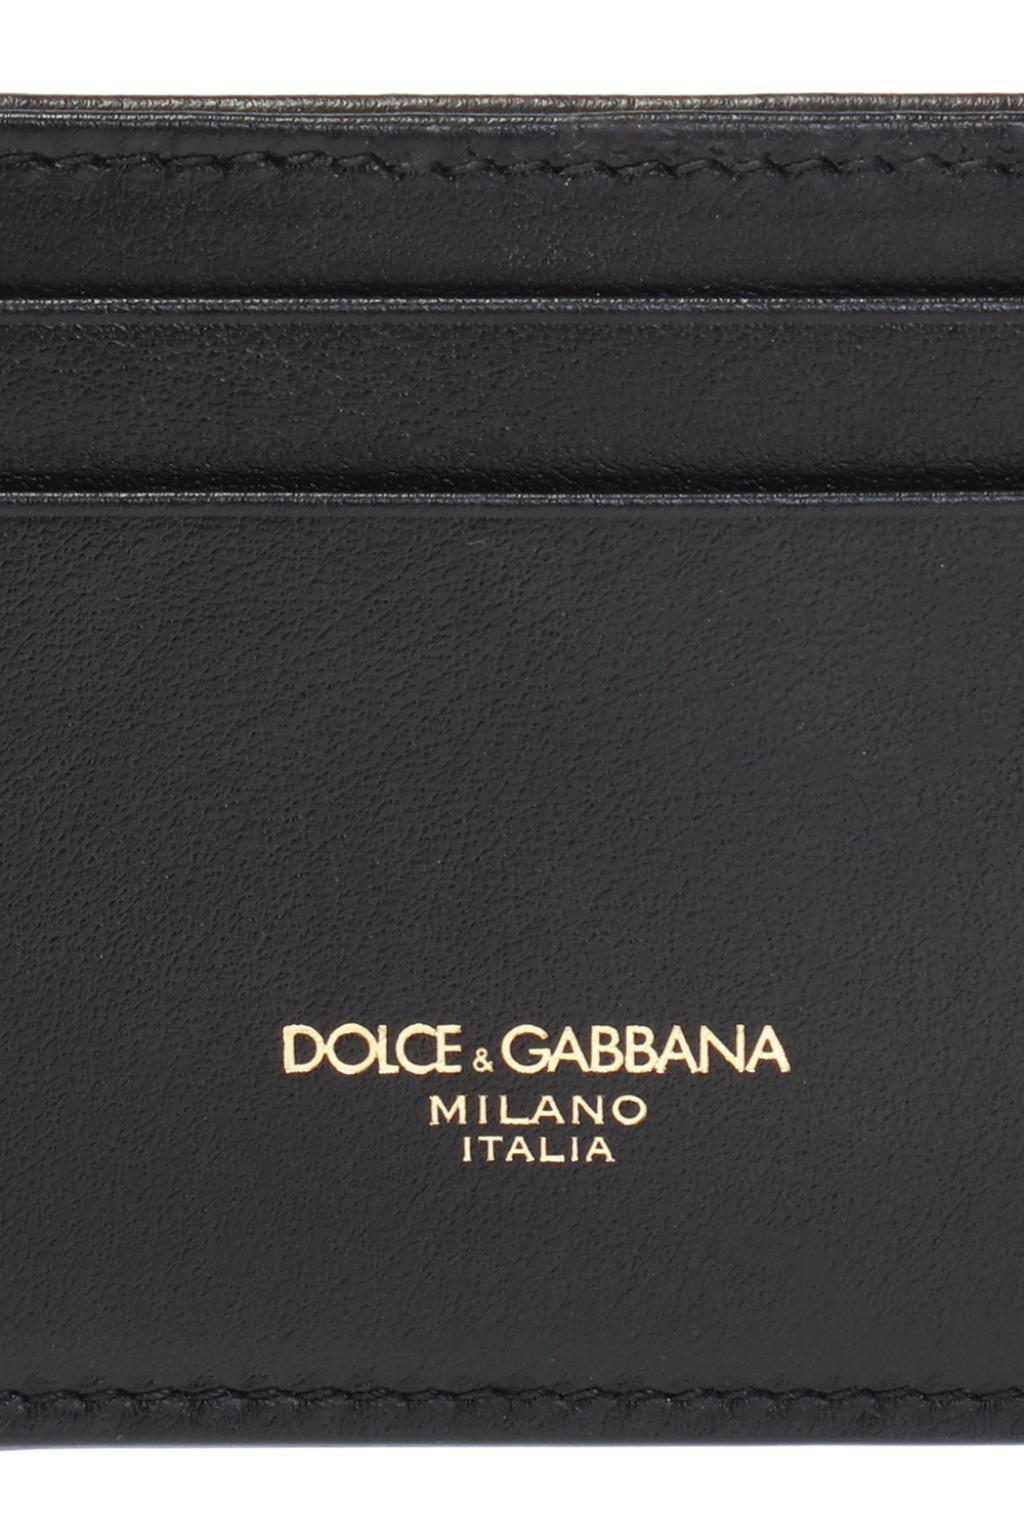 dolce and gabbana money clip